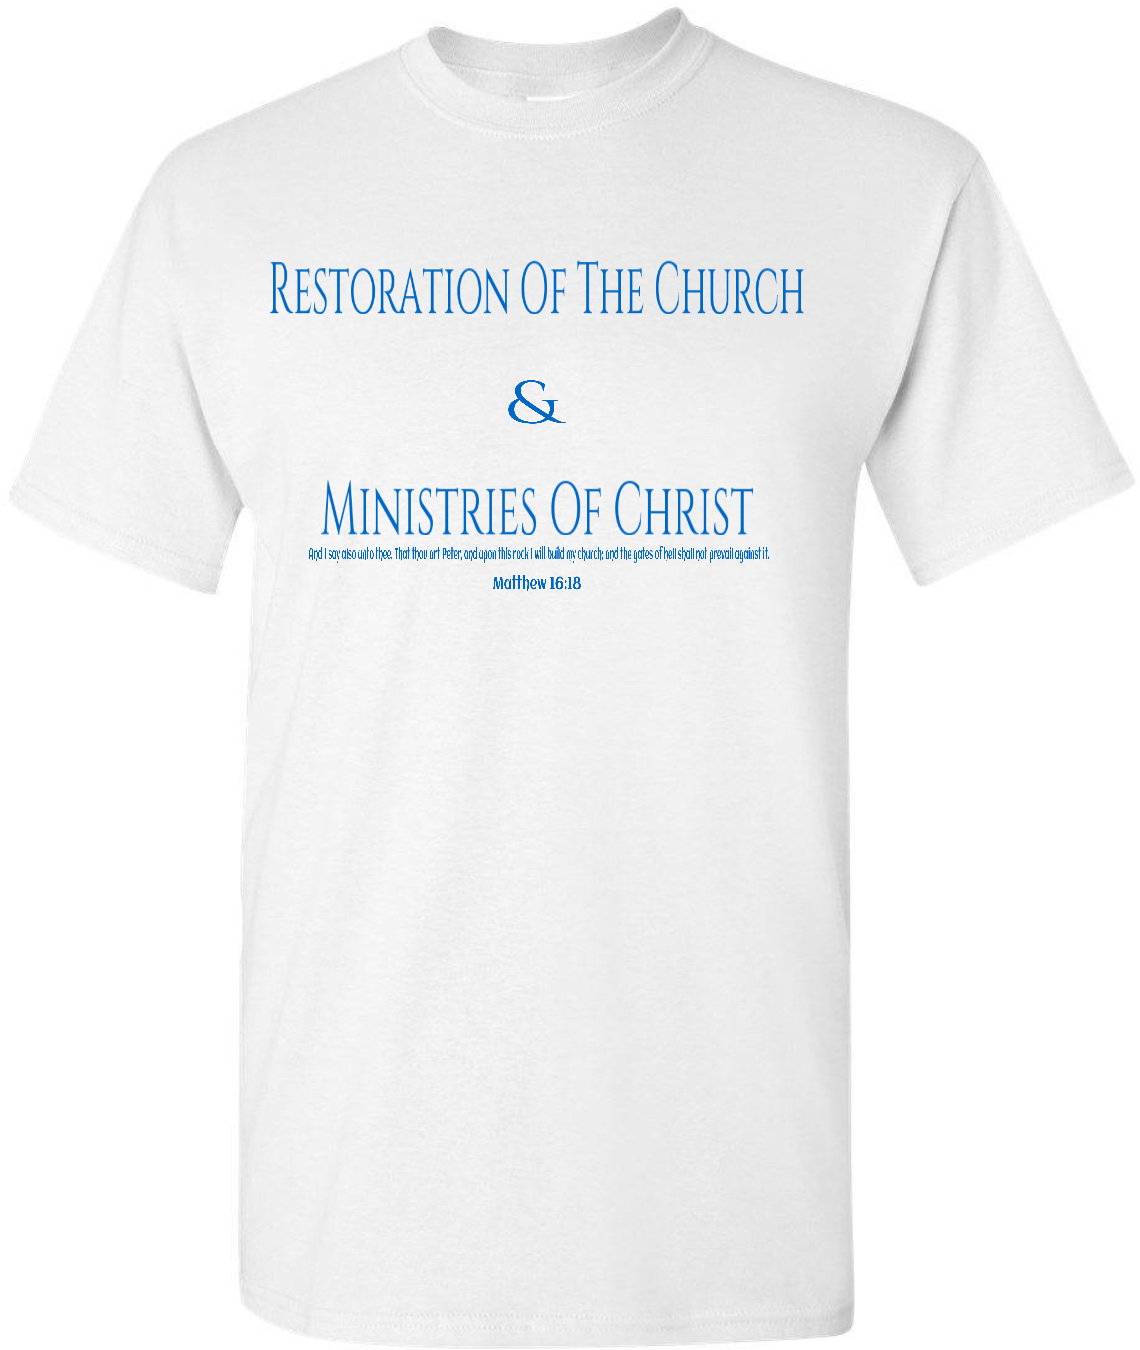 Church shirts